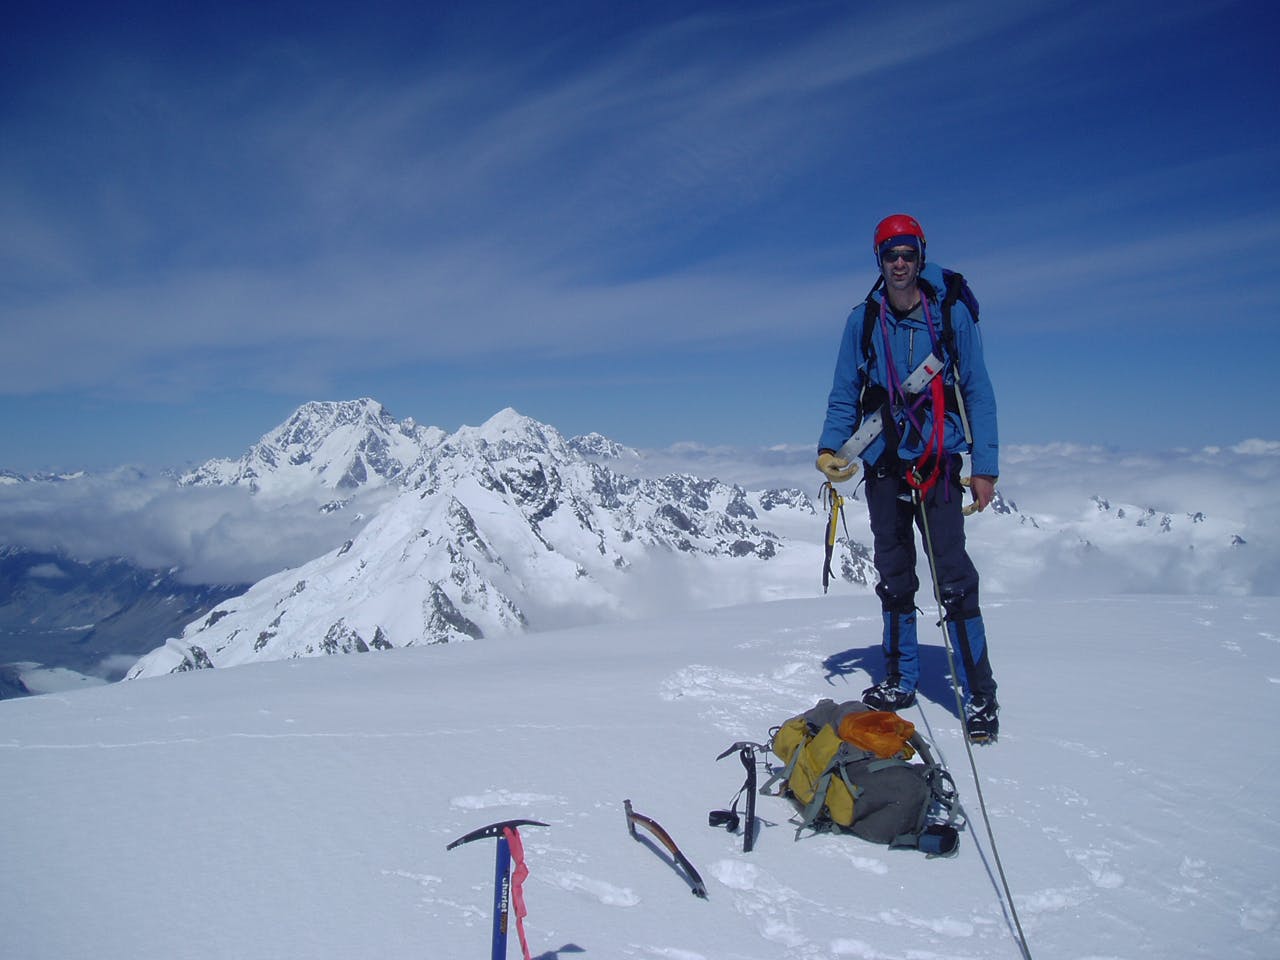 Darren on summit of Elie de Beaumont, with Cook and Tasman in background